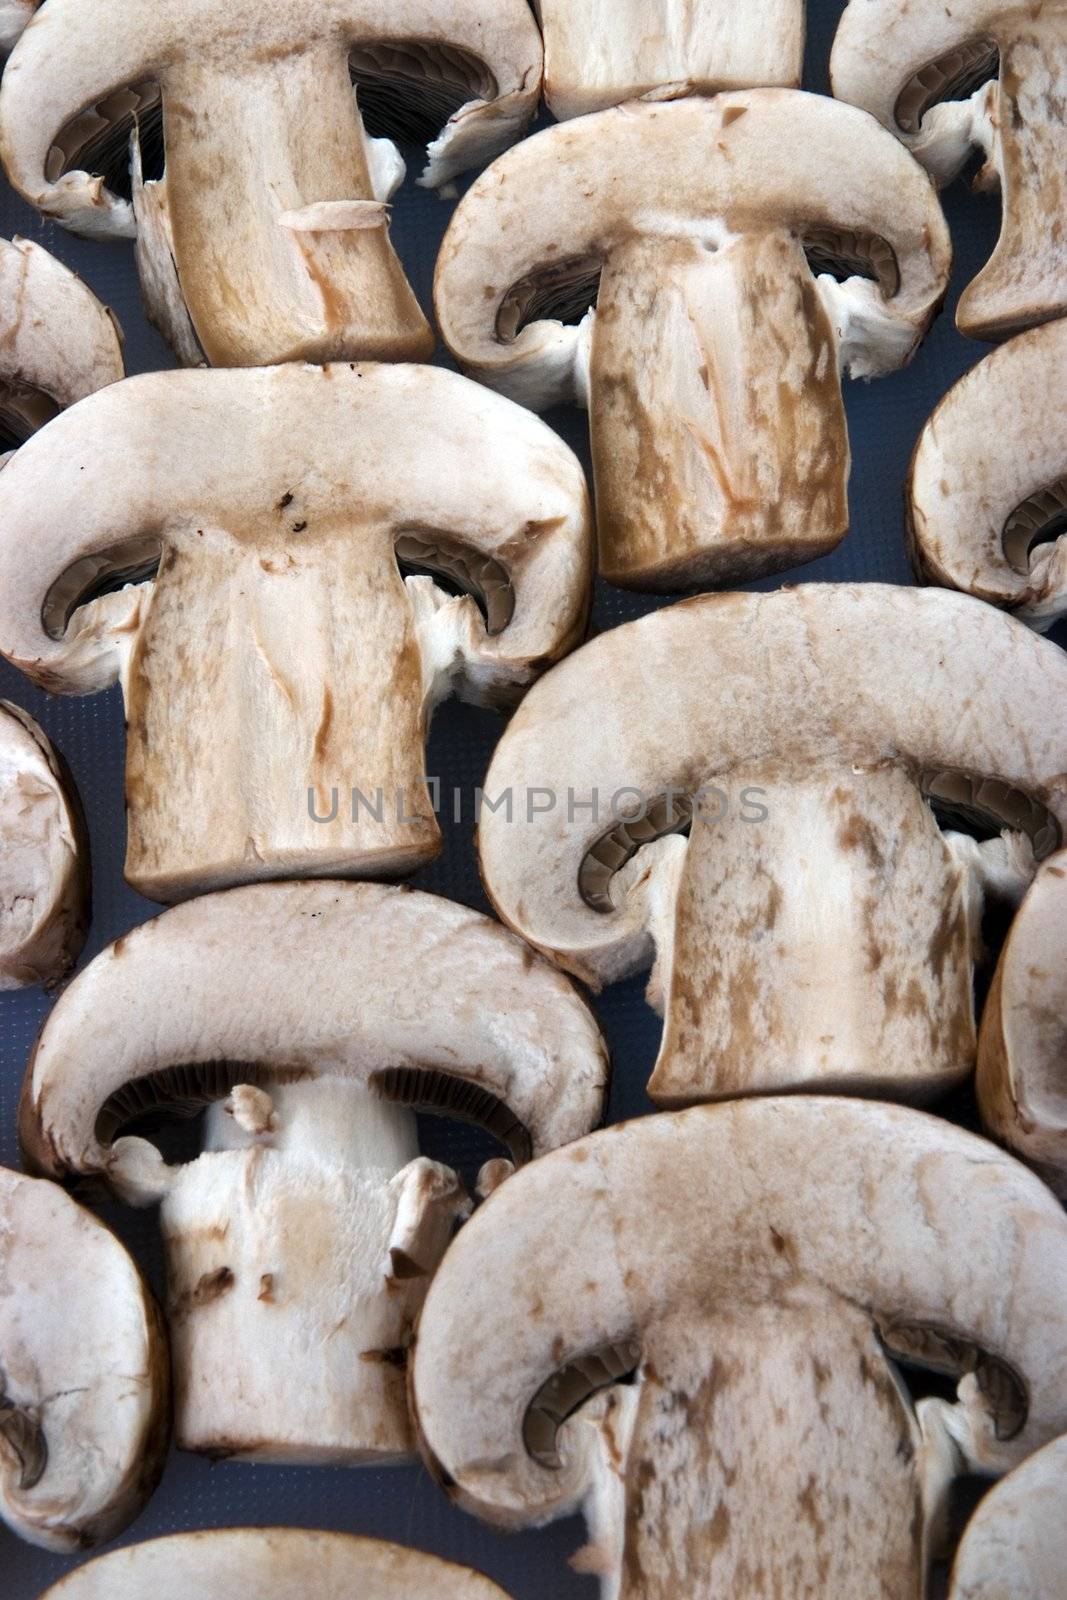 Organic mushrooms by runamock